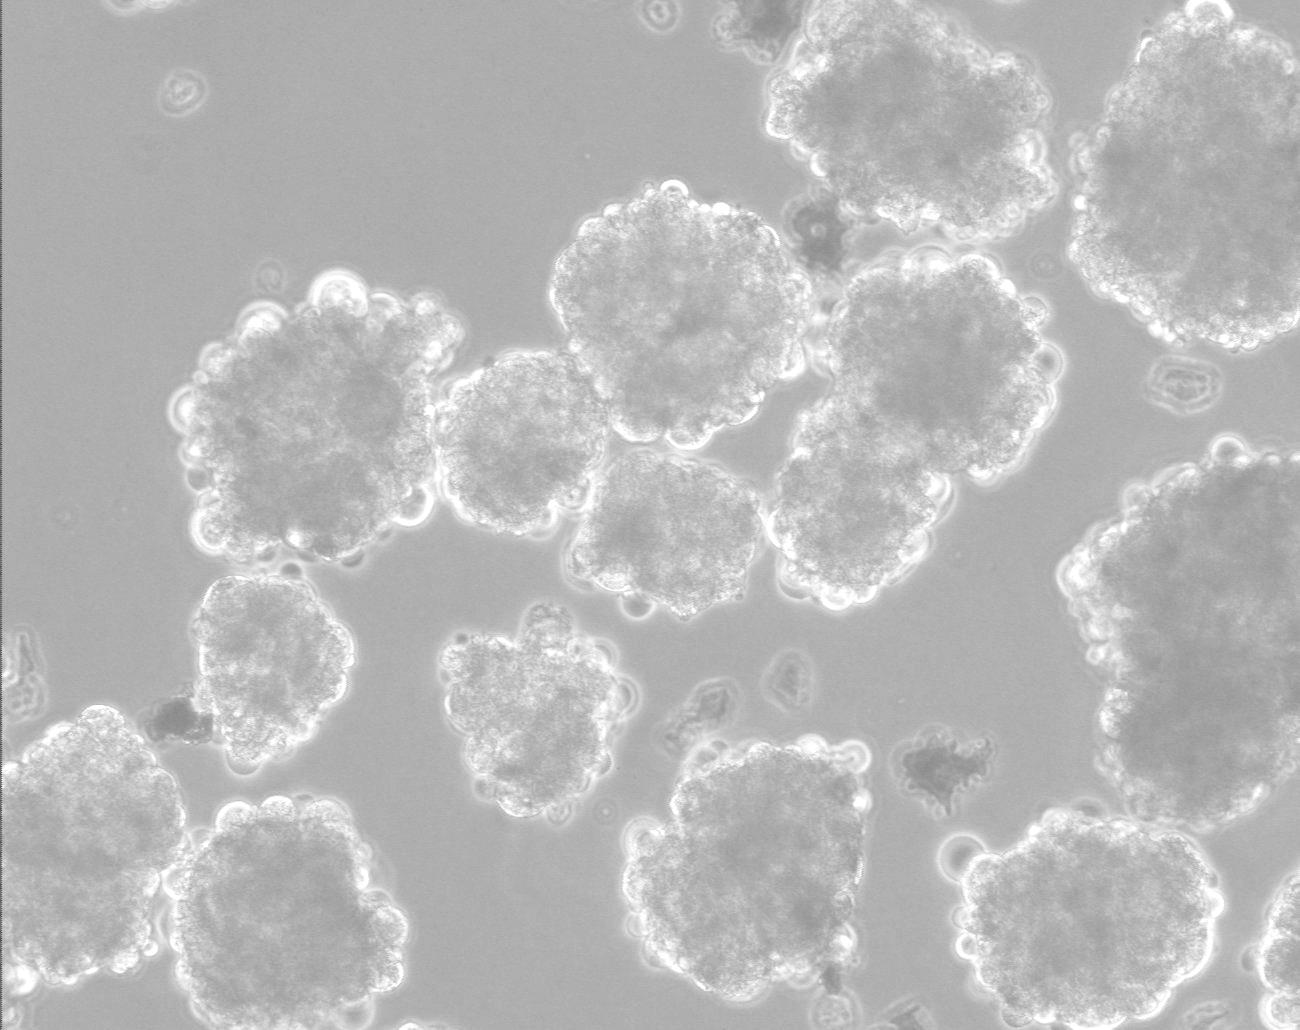 Figure 4 Aggregates of human embryonic stem cells in suspension. Courtesy of Prof. Benjamin Raubinoff and Dr. Deborah Steiner